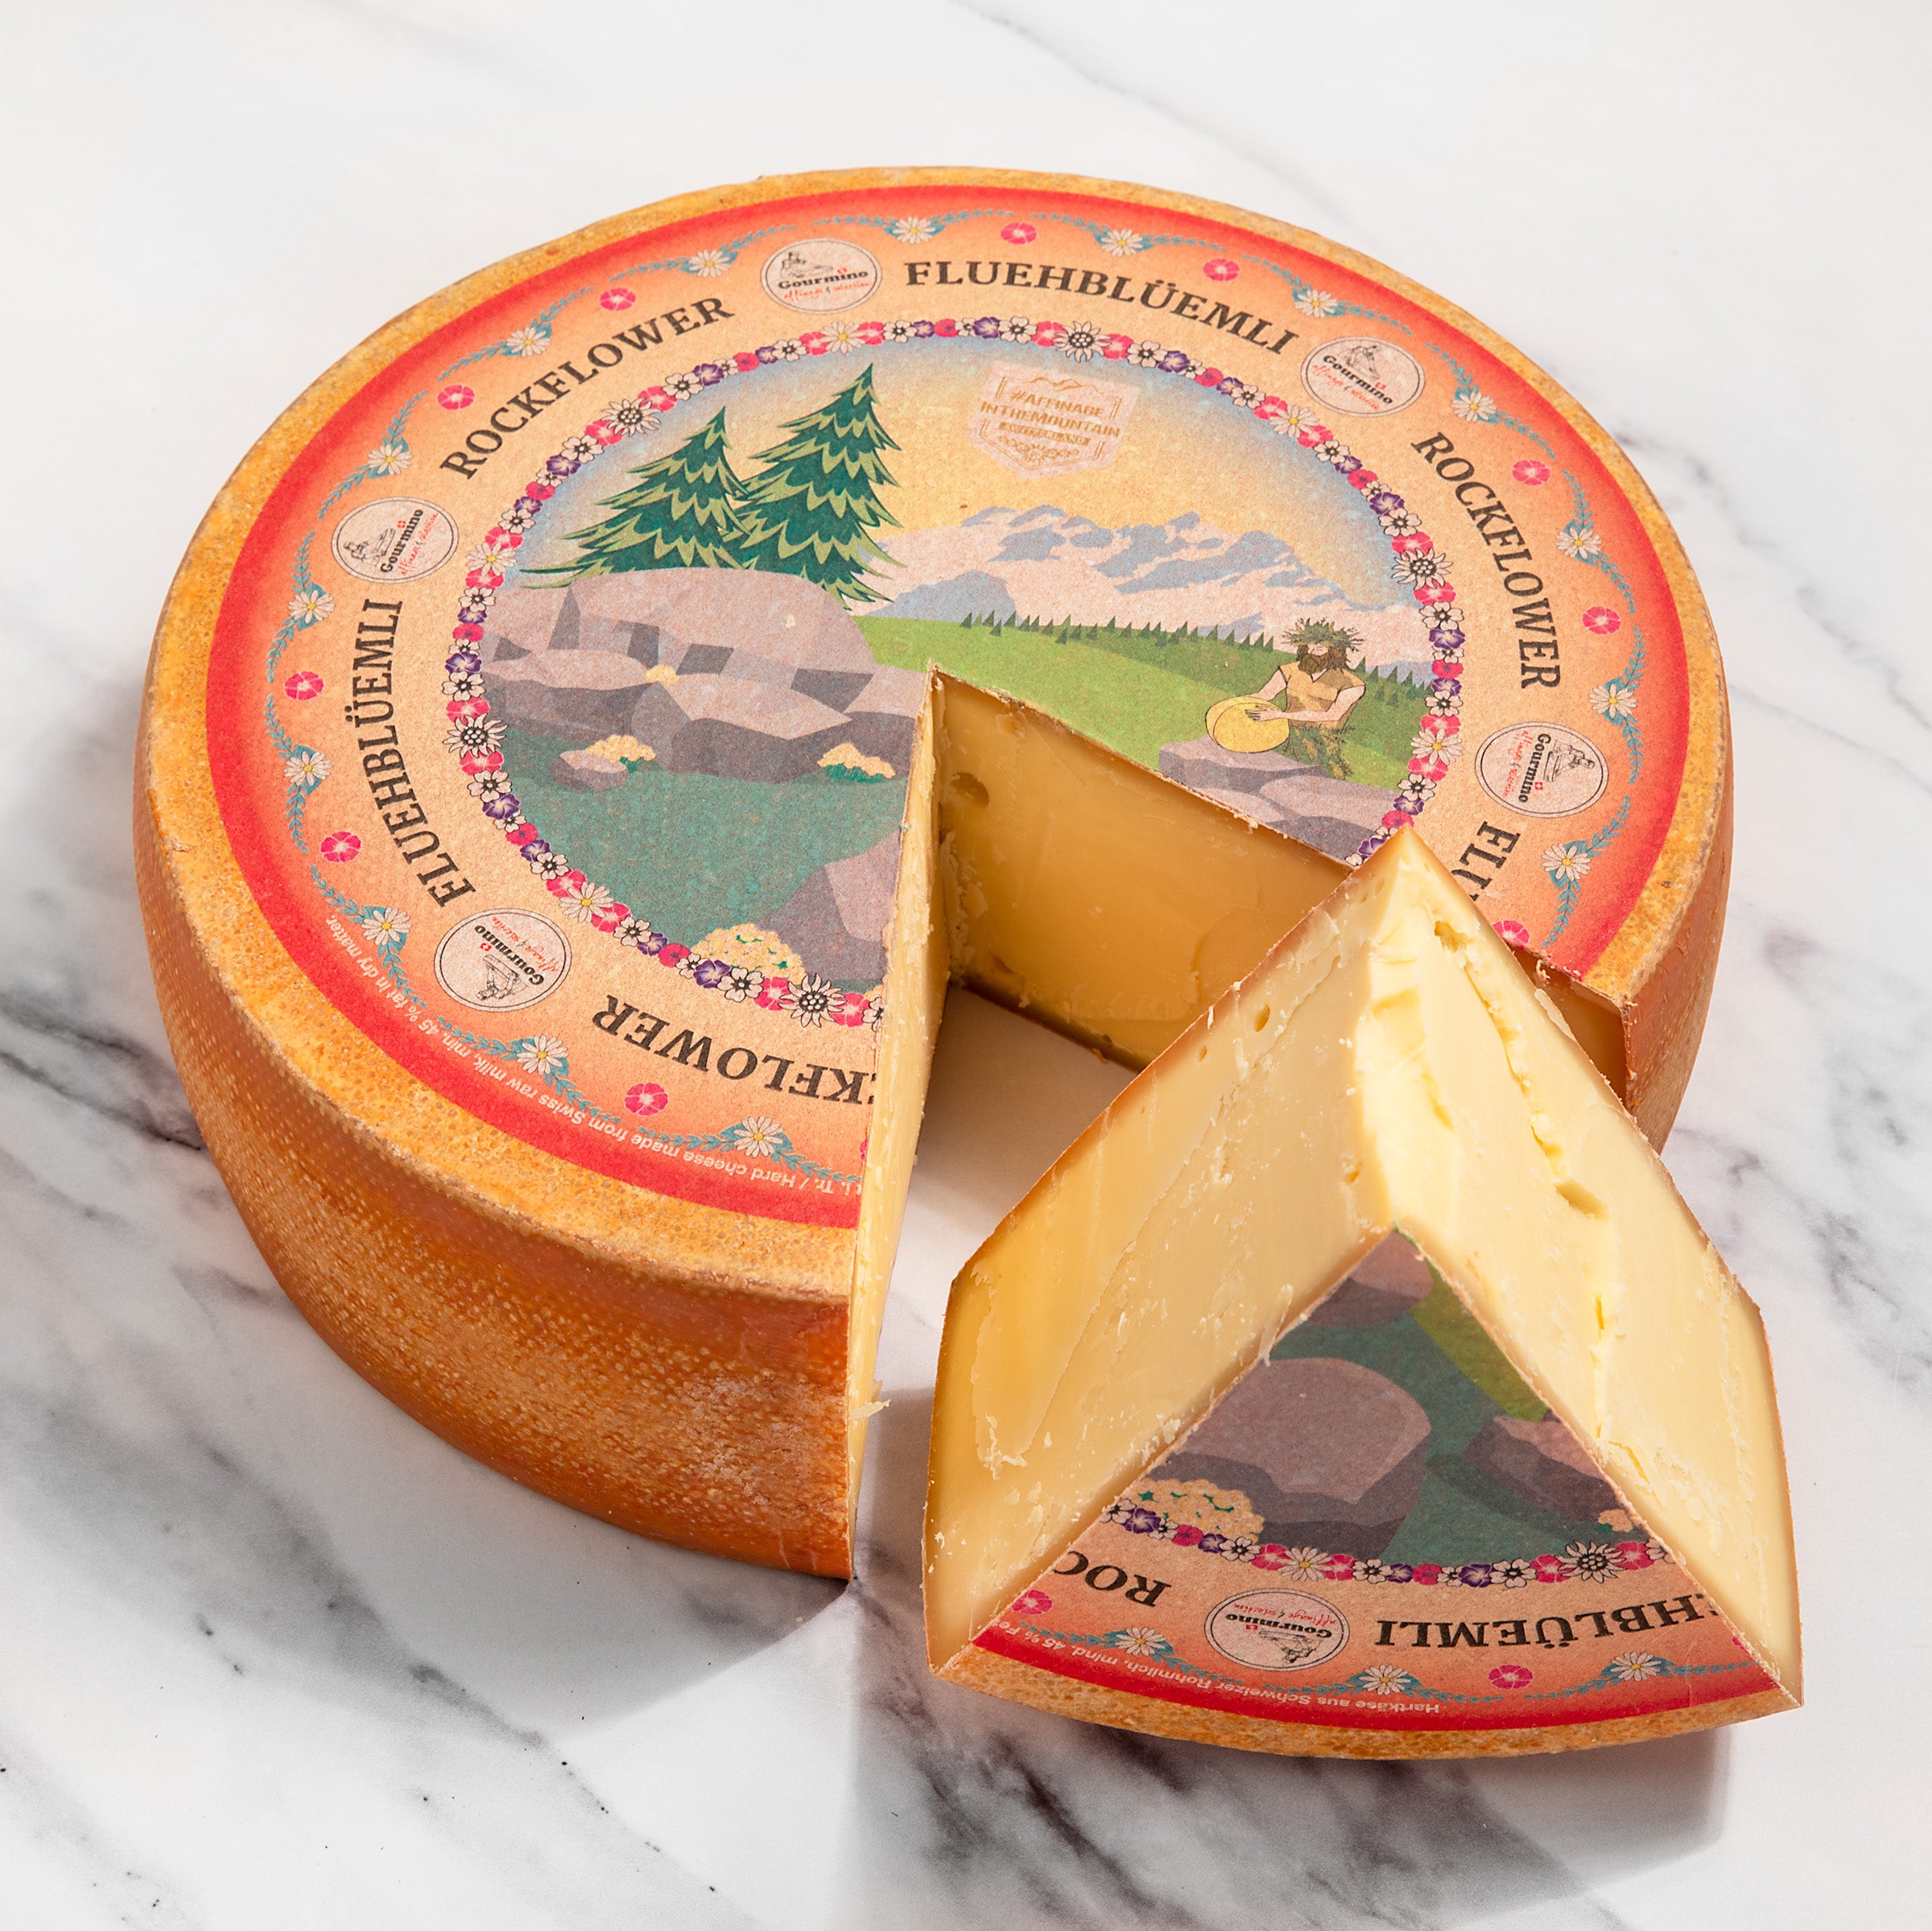 gourmet_15790_Rockflower Fluehblüemli Swiss Cheese Aged by Gourmino_Gourmino_Cheese